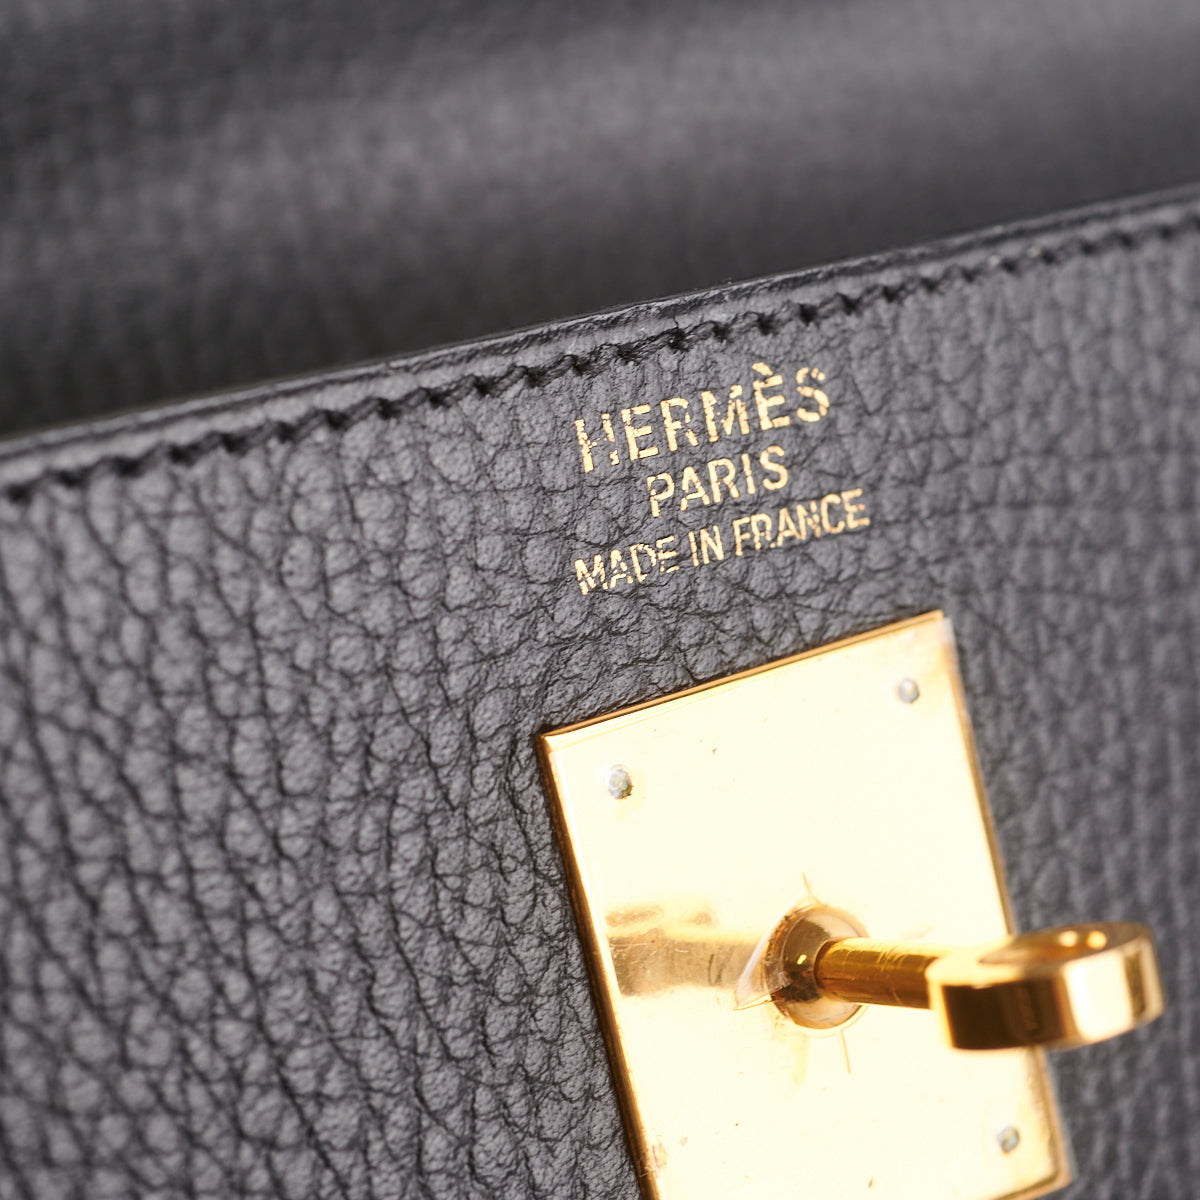 Hermes Kelly Handbag Bicolor Ardennes with Gold Hardware 40 3954025